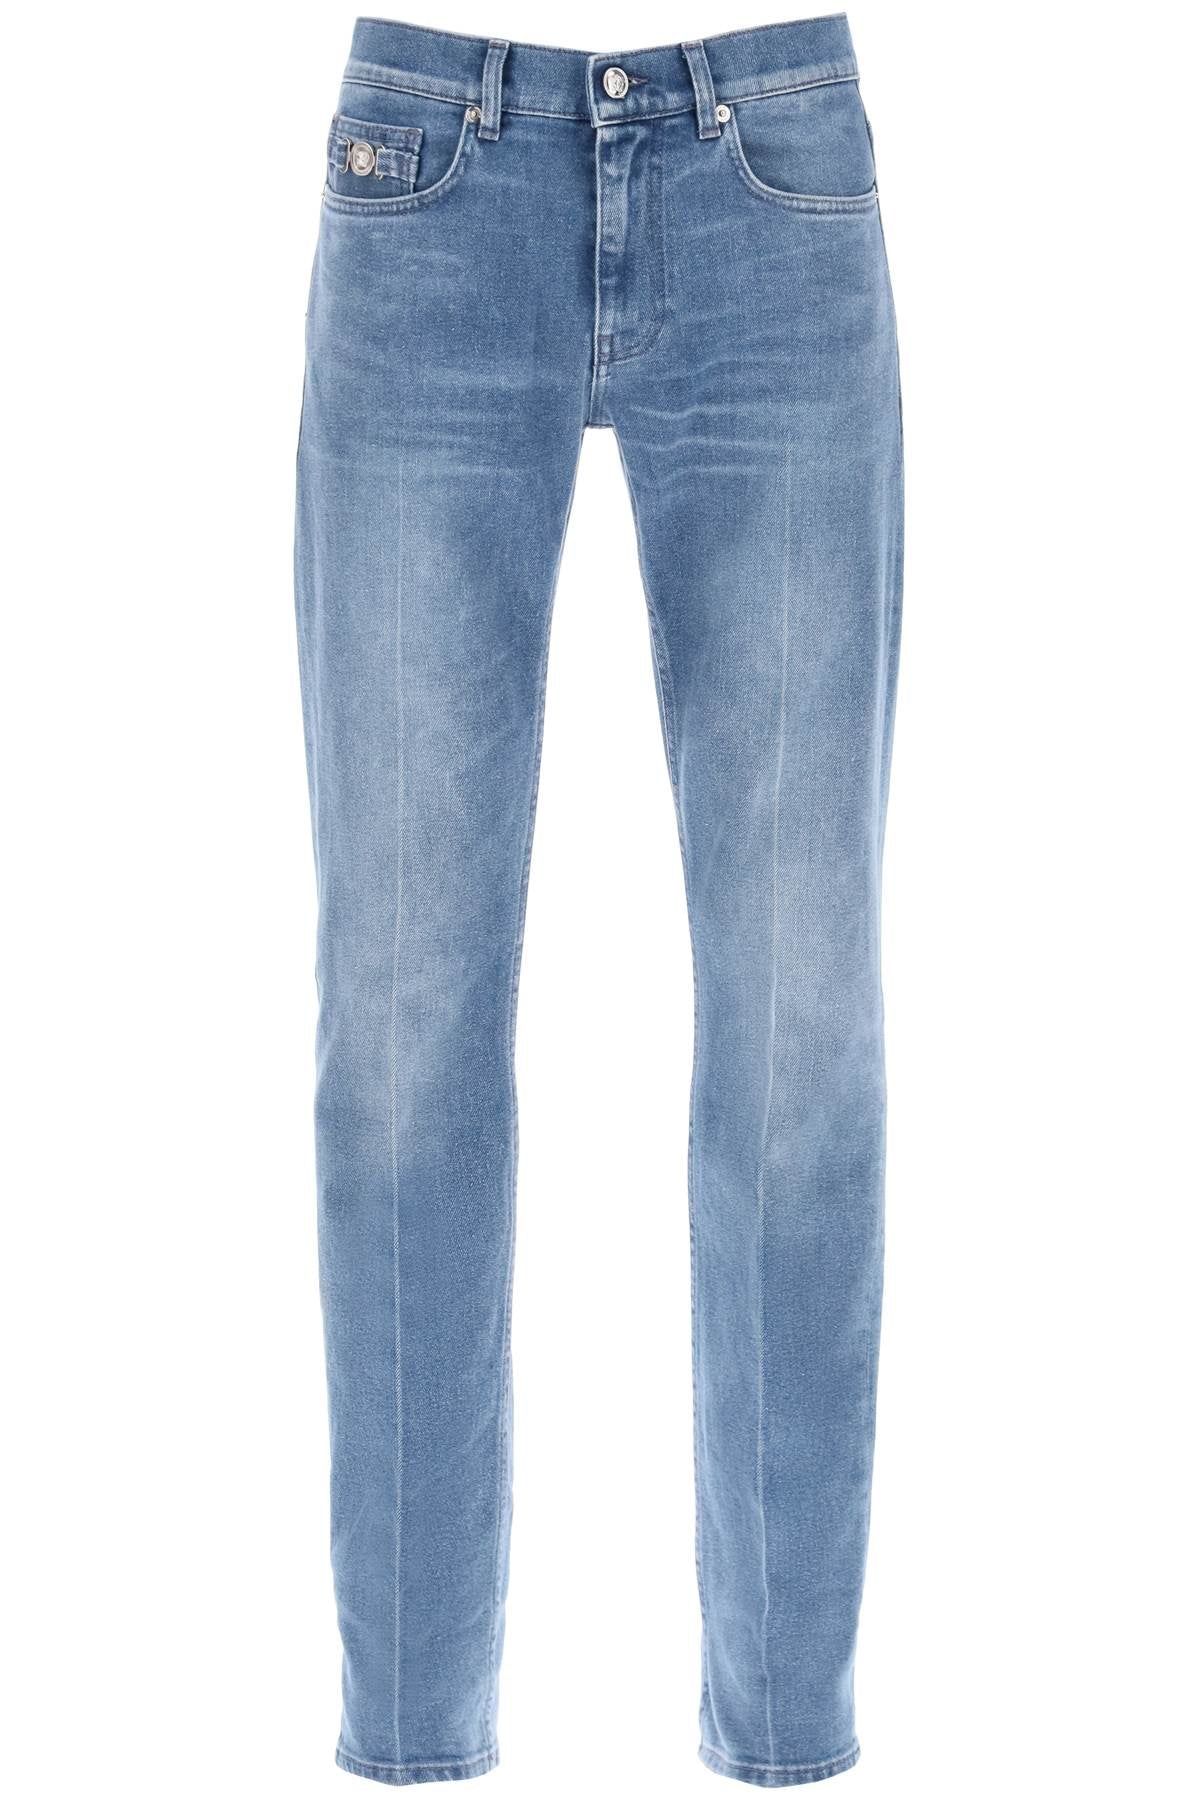 Versace stretch denim slim fit jeans-0